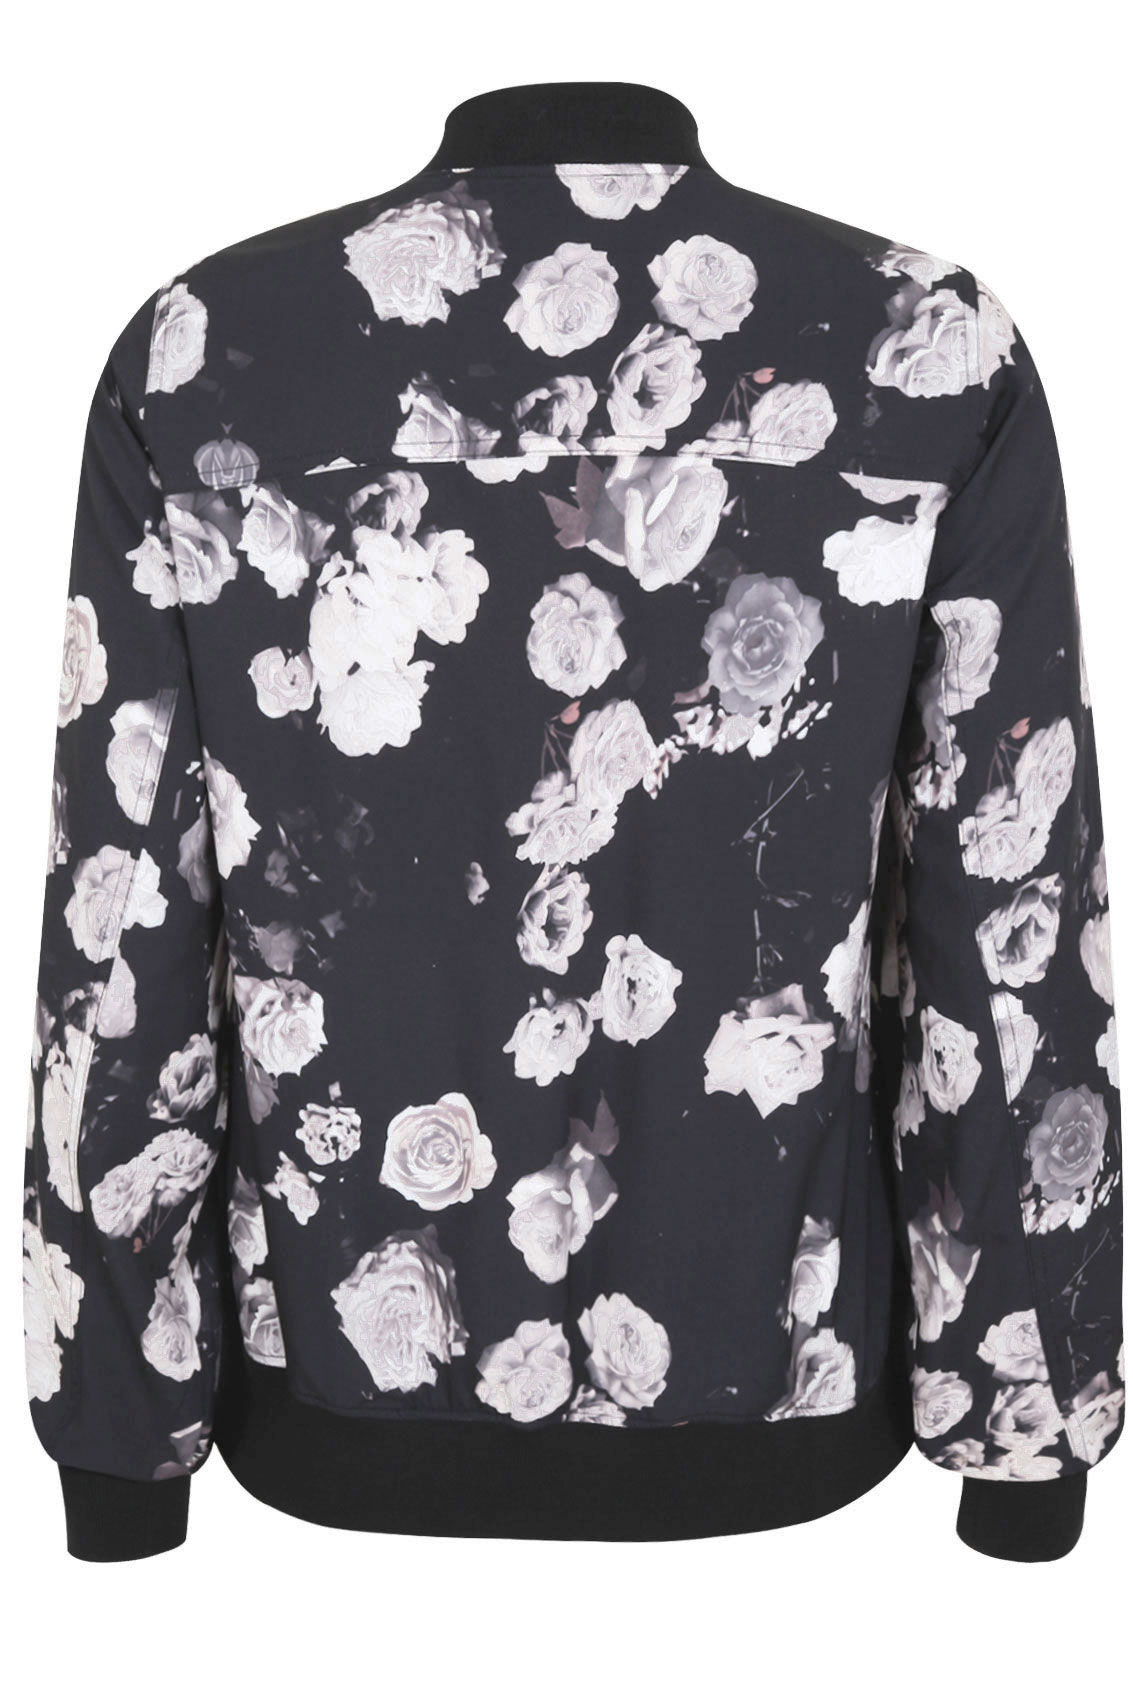 Black & Grey Floral Print Bomber Jacket Plus Size 16 to 32